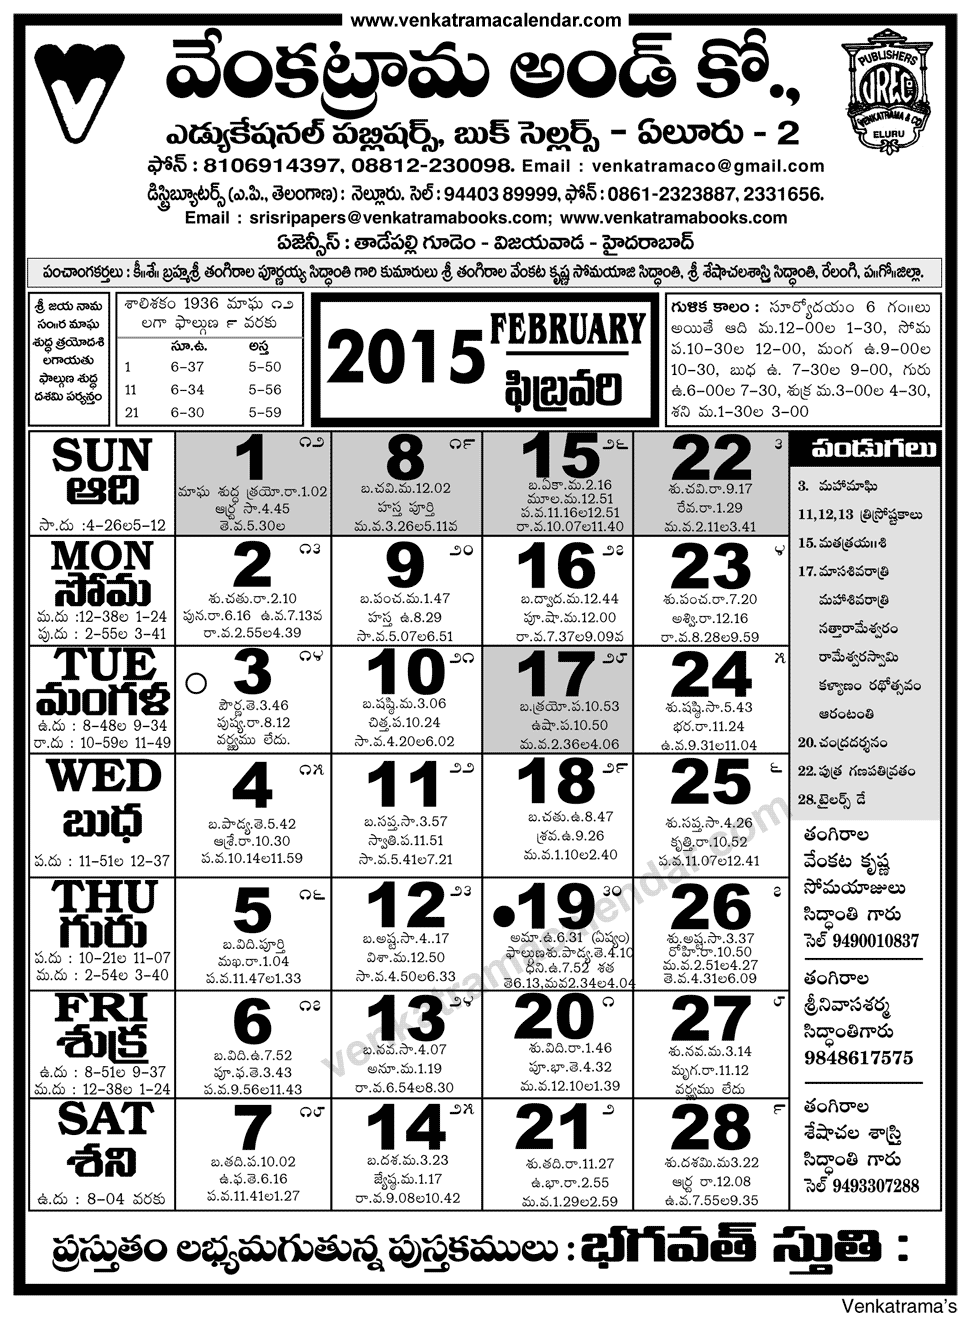 February 2015 Venkatrama Co Telugu Calendar - Venkatrama Telugu